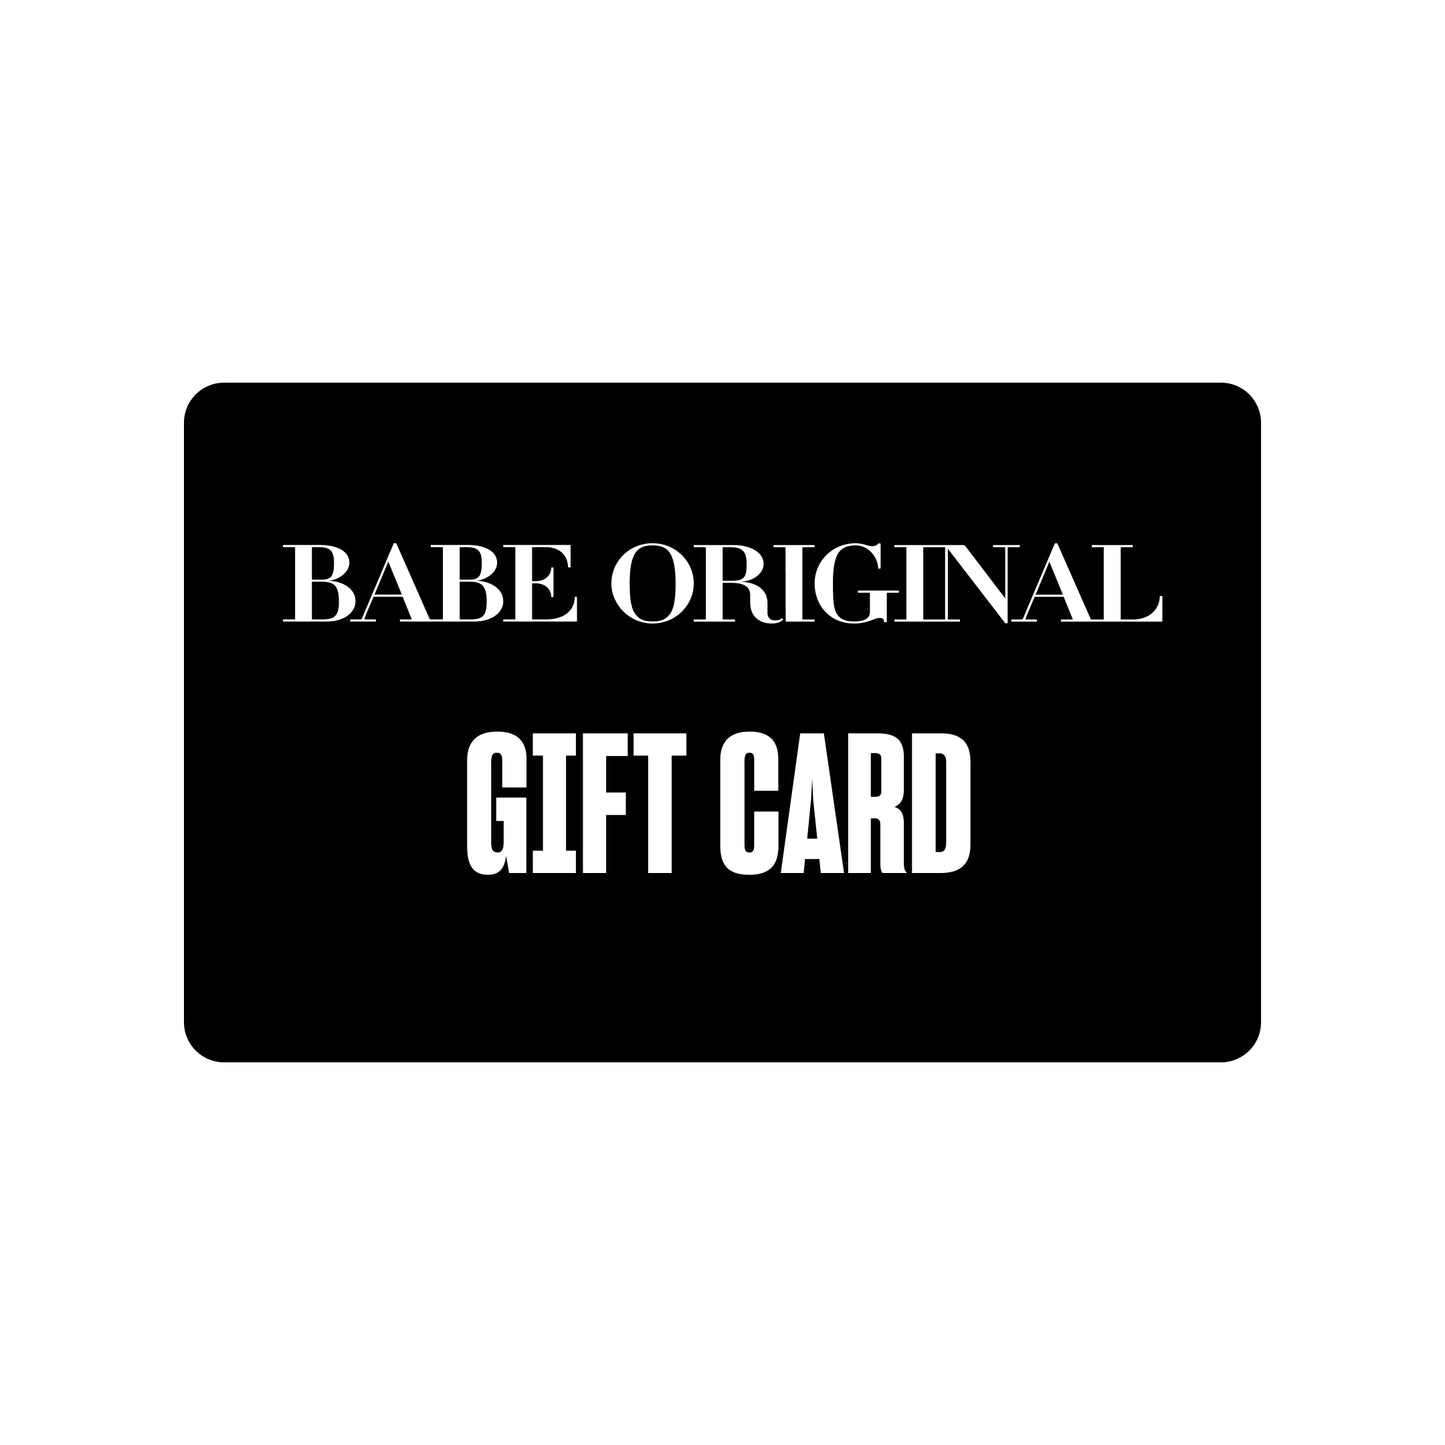 Babe Original Gift Card